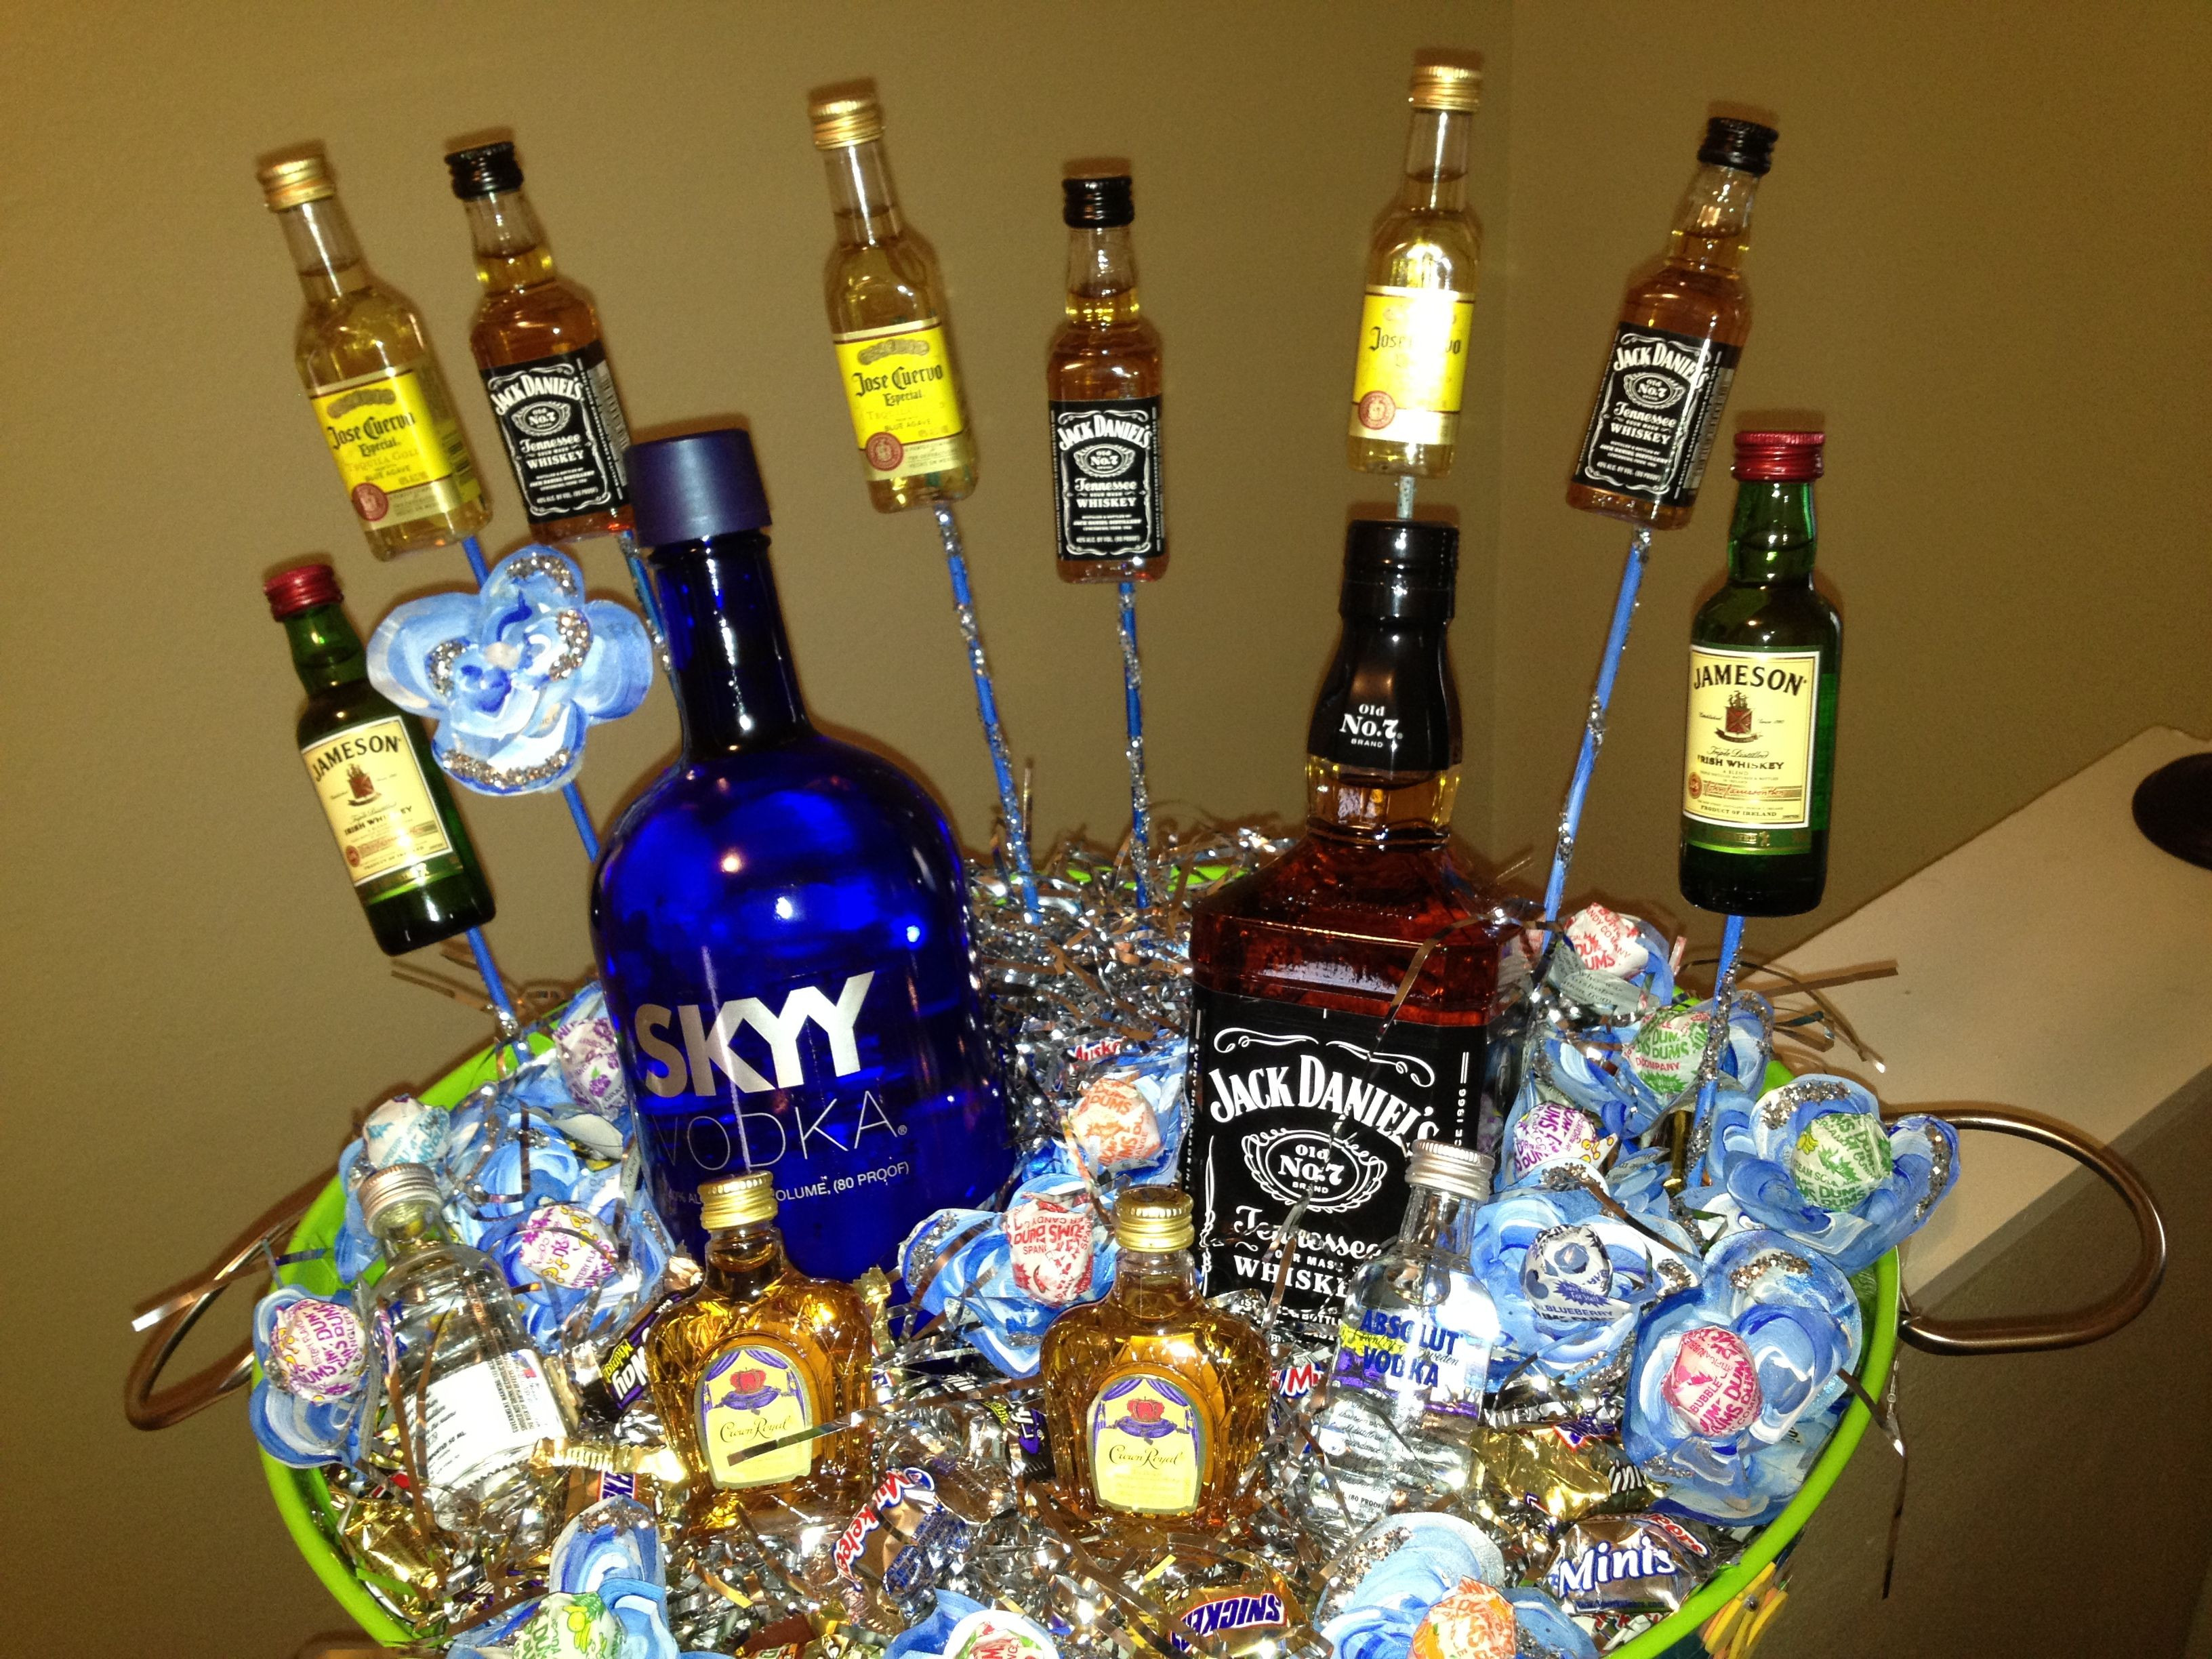 Best ideas about Liquor Gift Ideas
. Save or Pin 21st Birthday Liquor Basket Those Dum Dum flowers took Now.